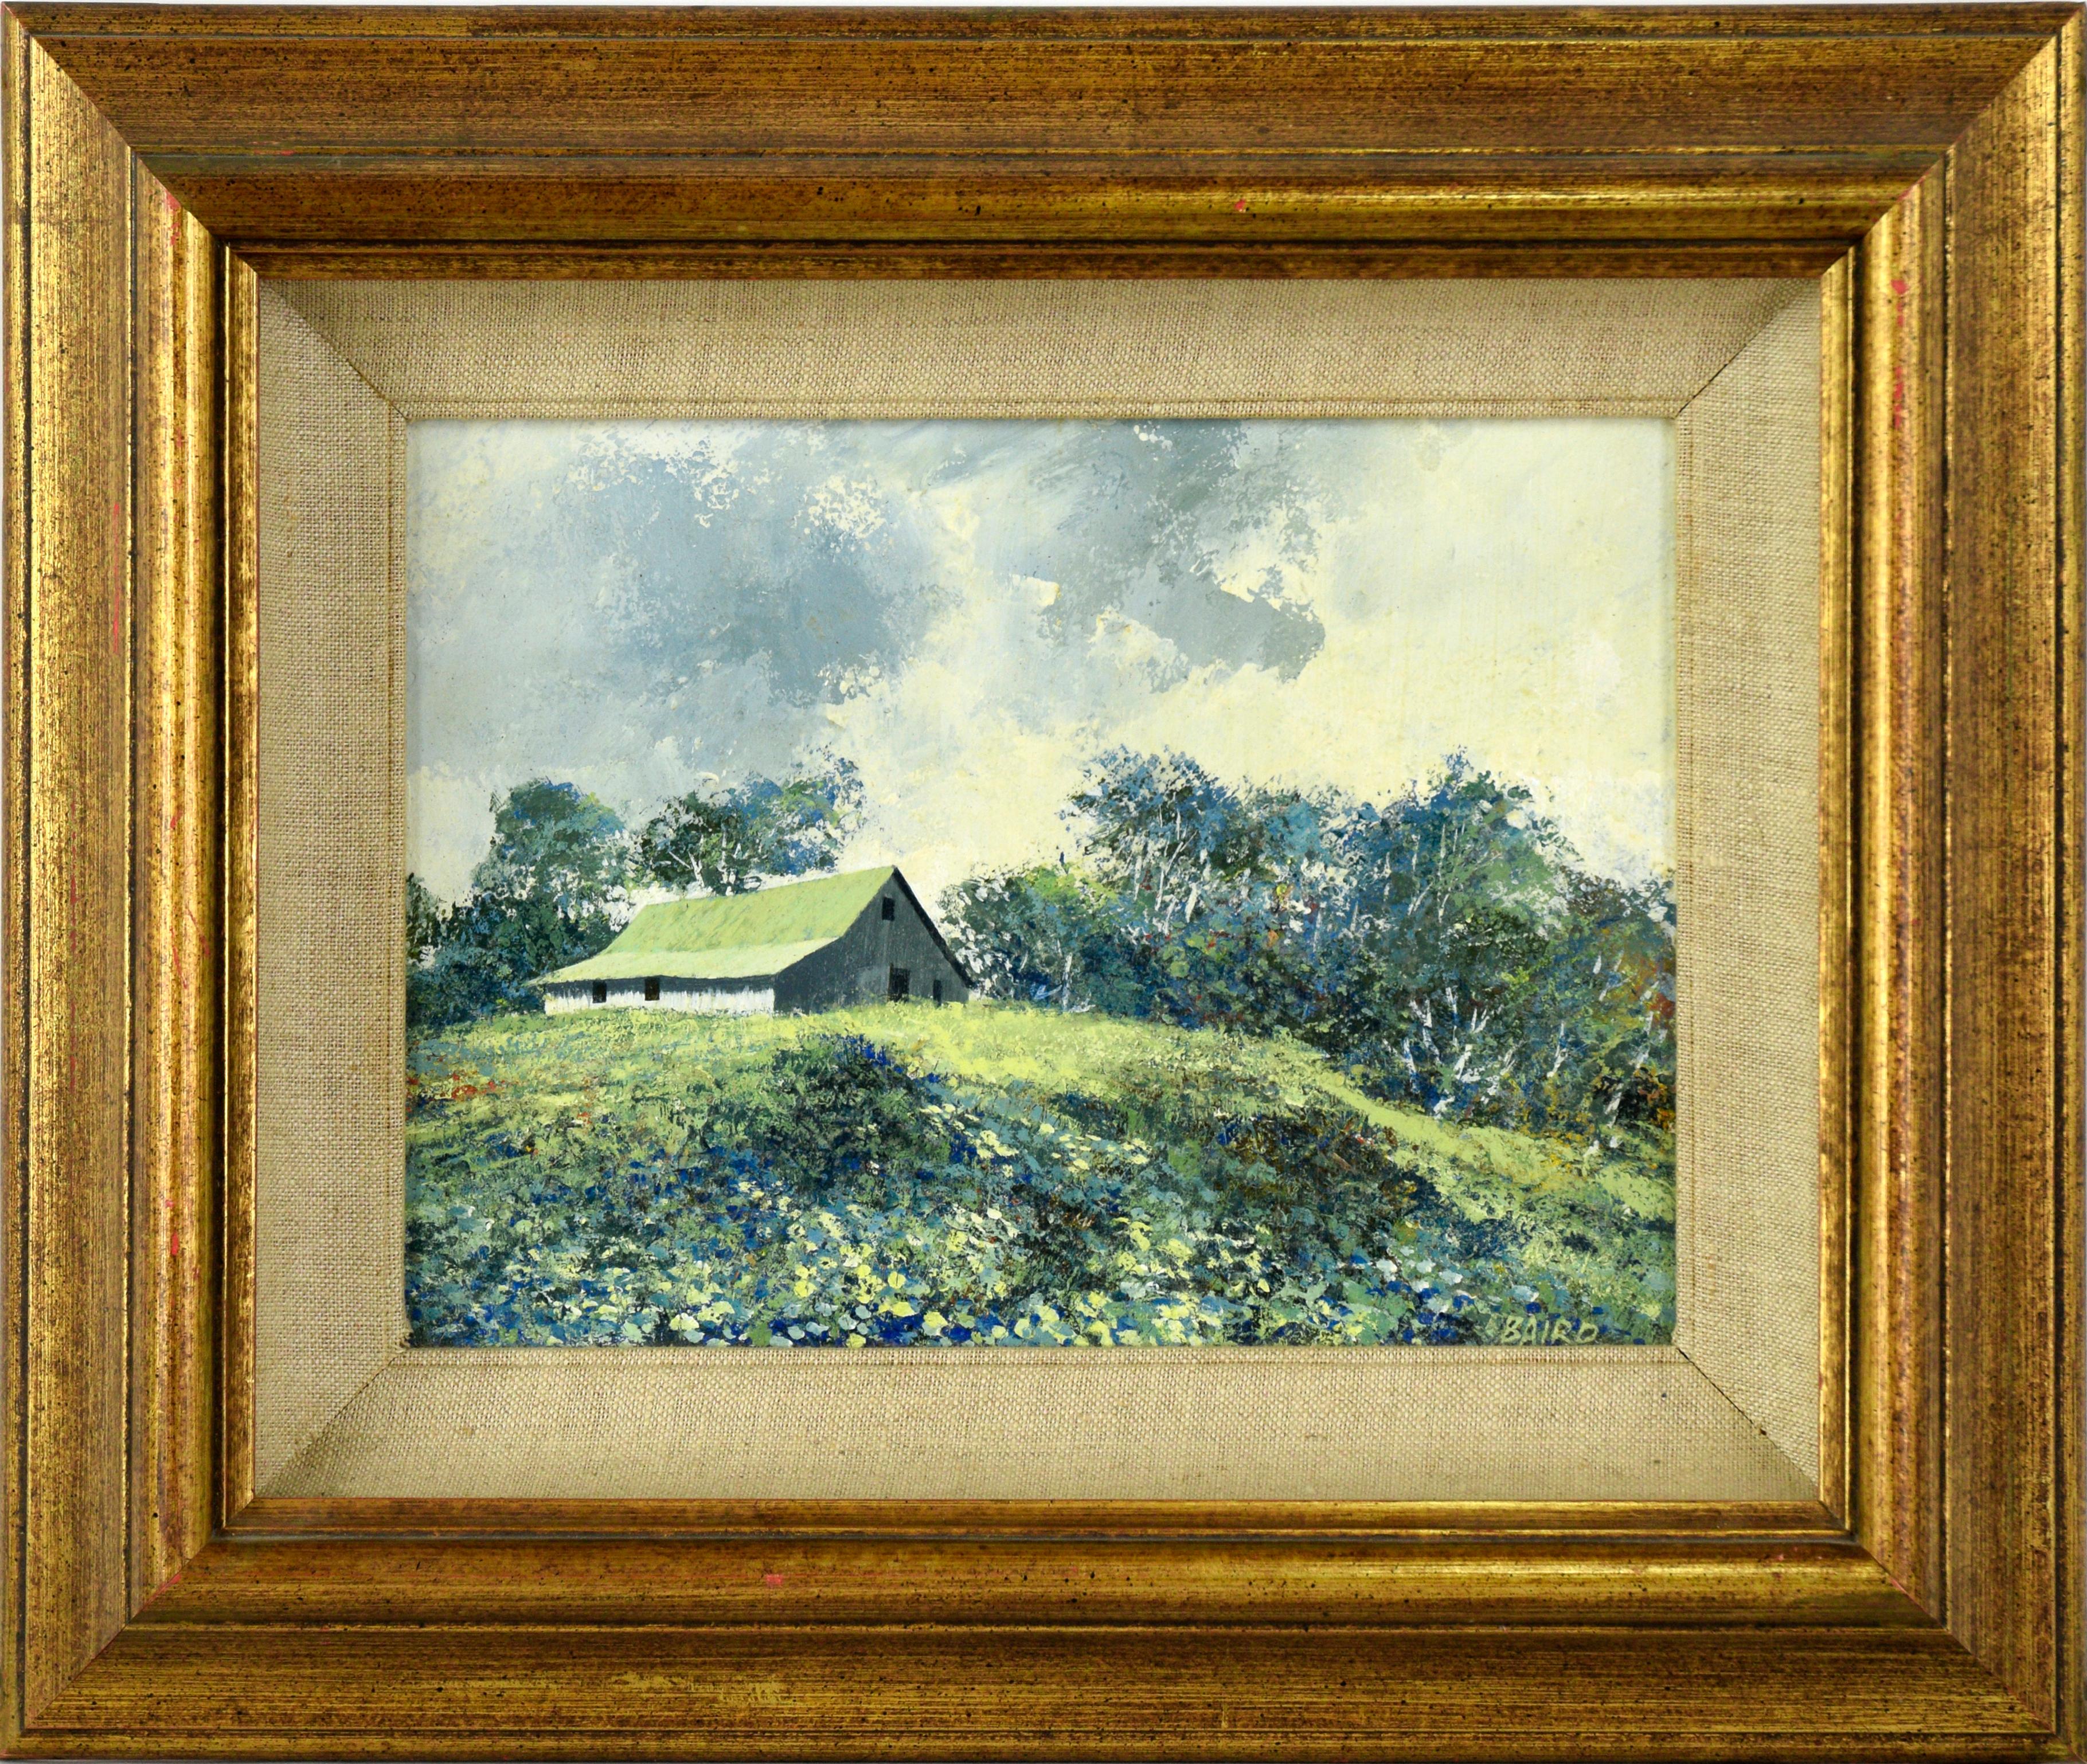 Warner Baird Landscape Painting - "Near Spring" Green Barn Landscape in Oil on Illustration Board